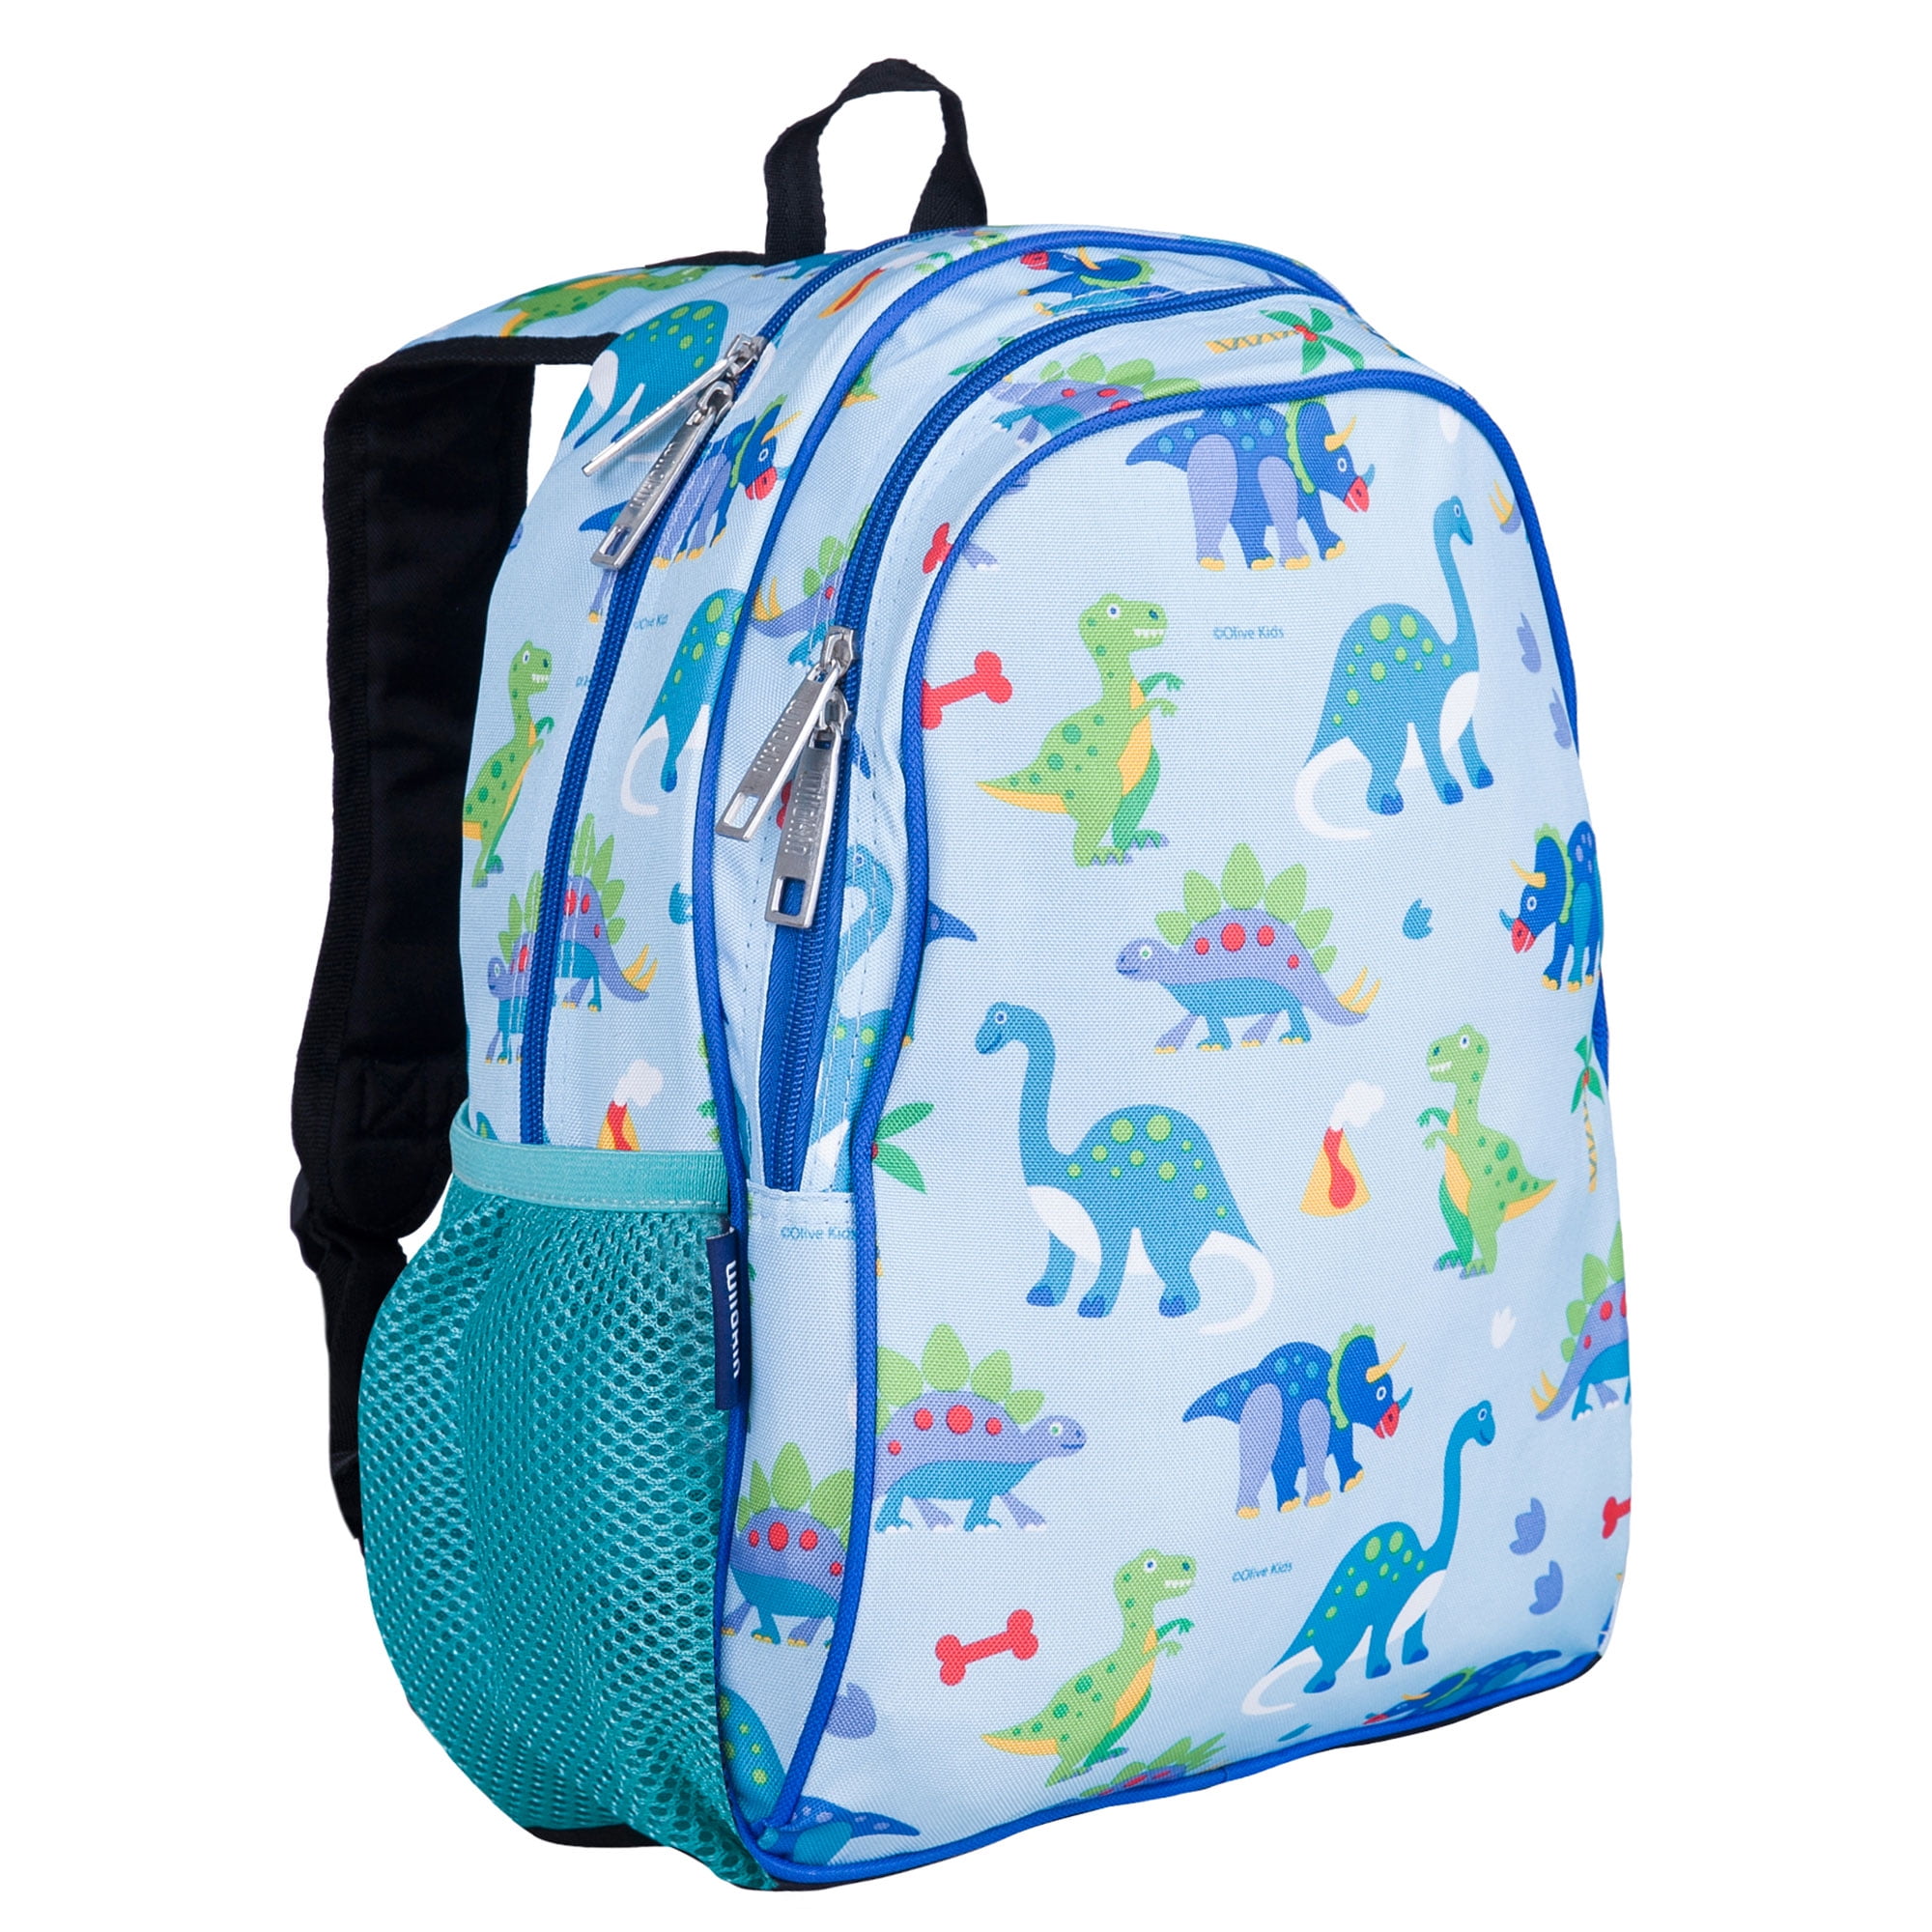 Toddler Dinosaur Backpack 12" School Bags for Kids Boys Girls Daycare Preschool 